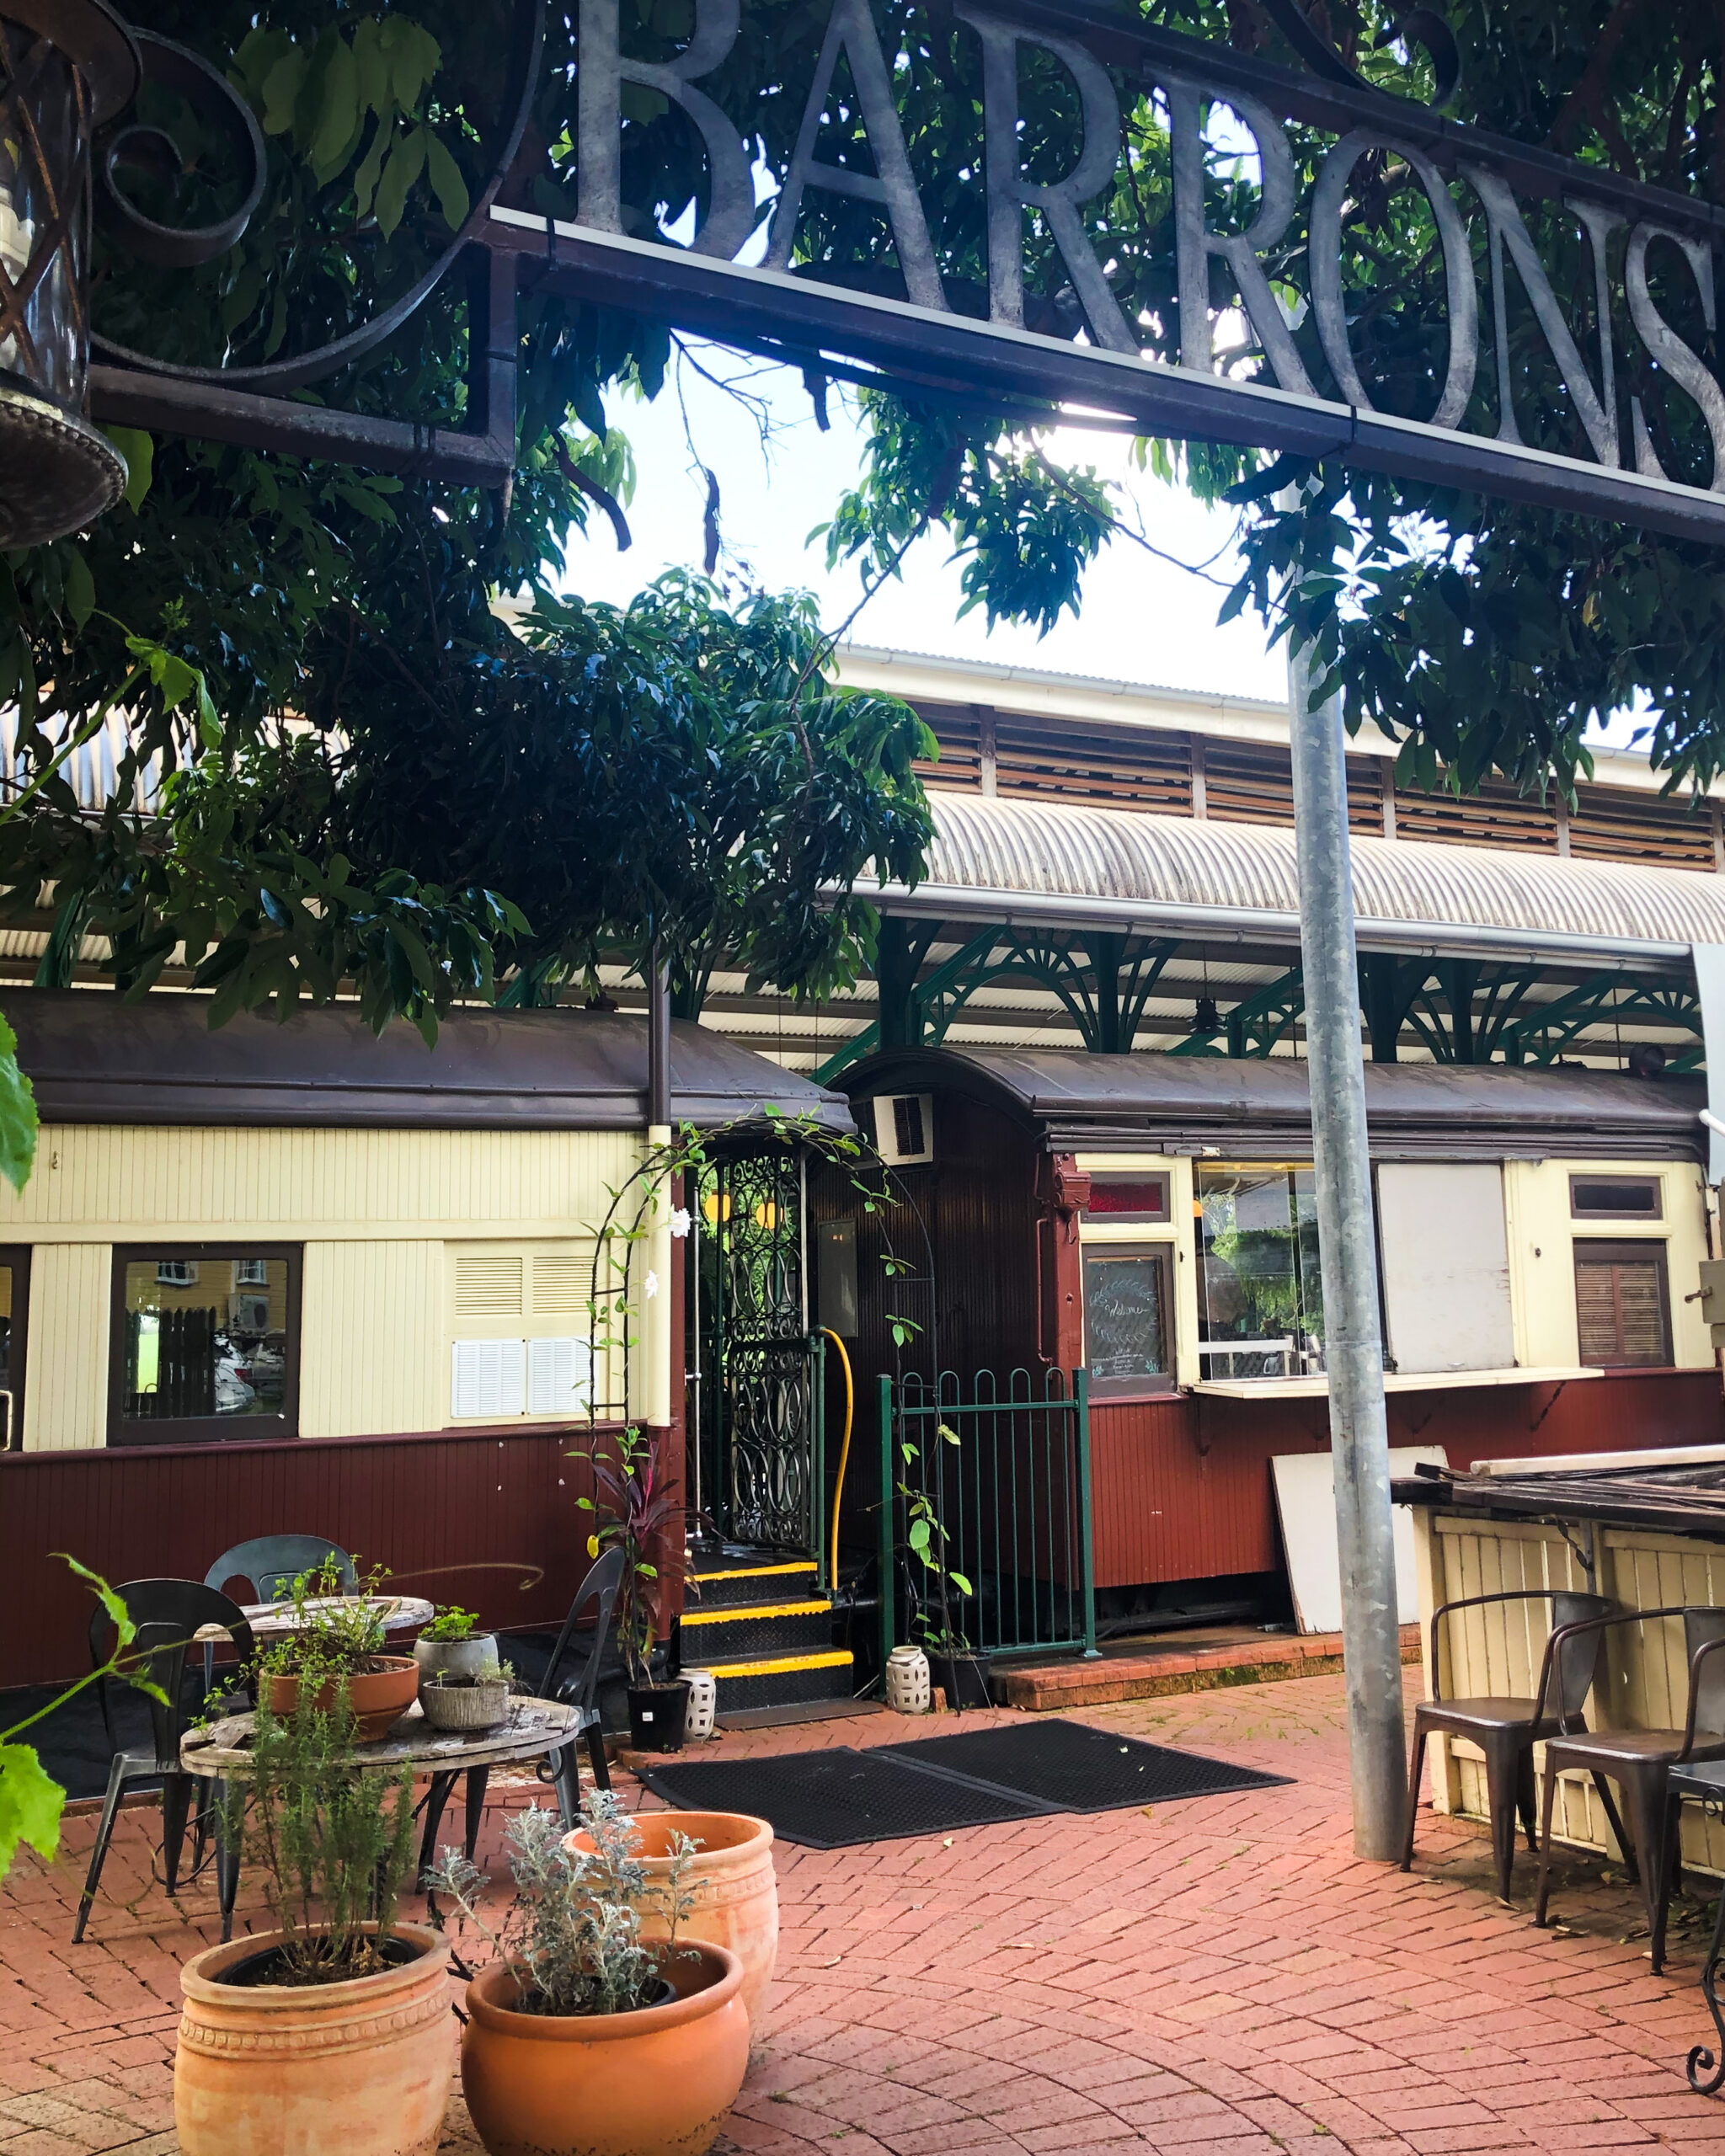 Freshwater Railway Station cafe leading to train